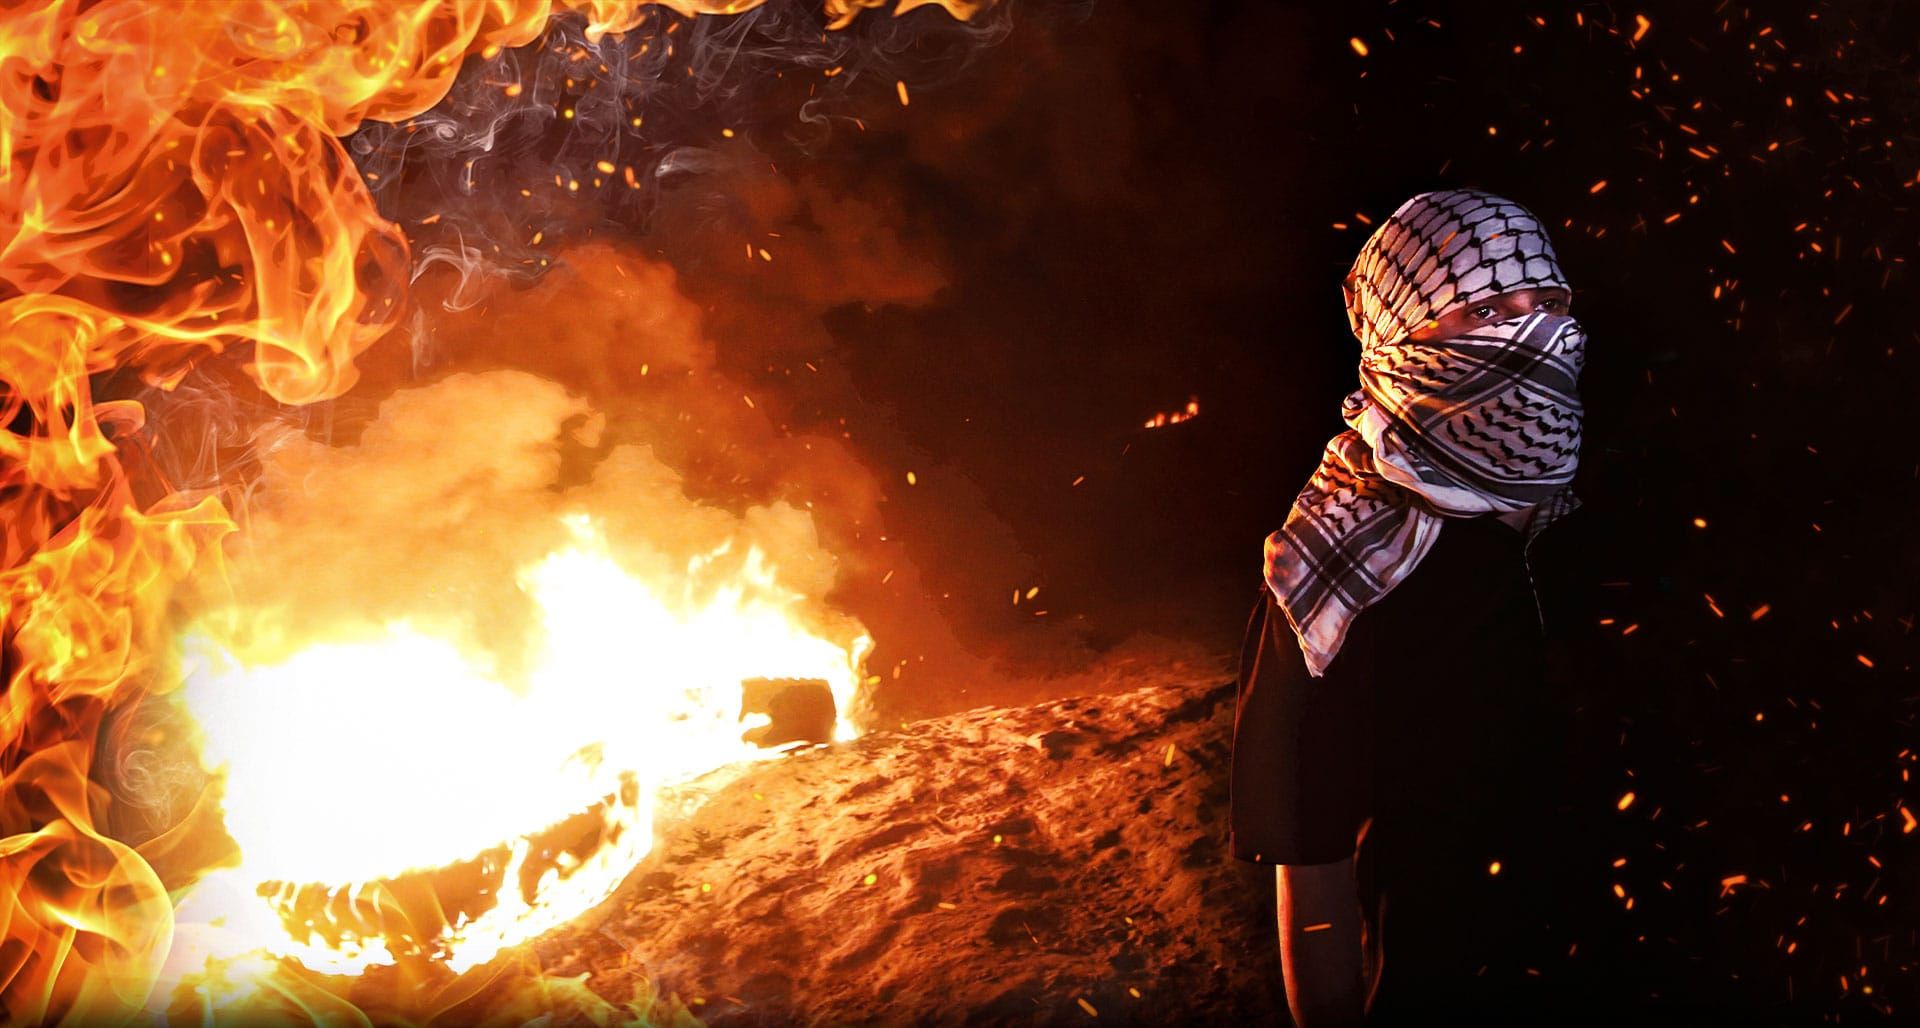 Gaza riots Ahmed Zakot/SOPA Images/LightRocket via Getty